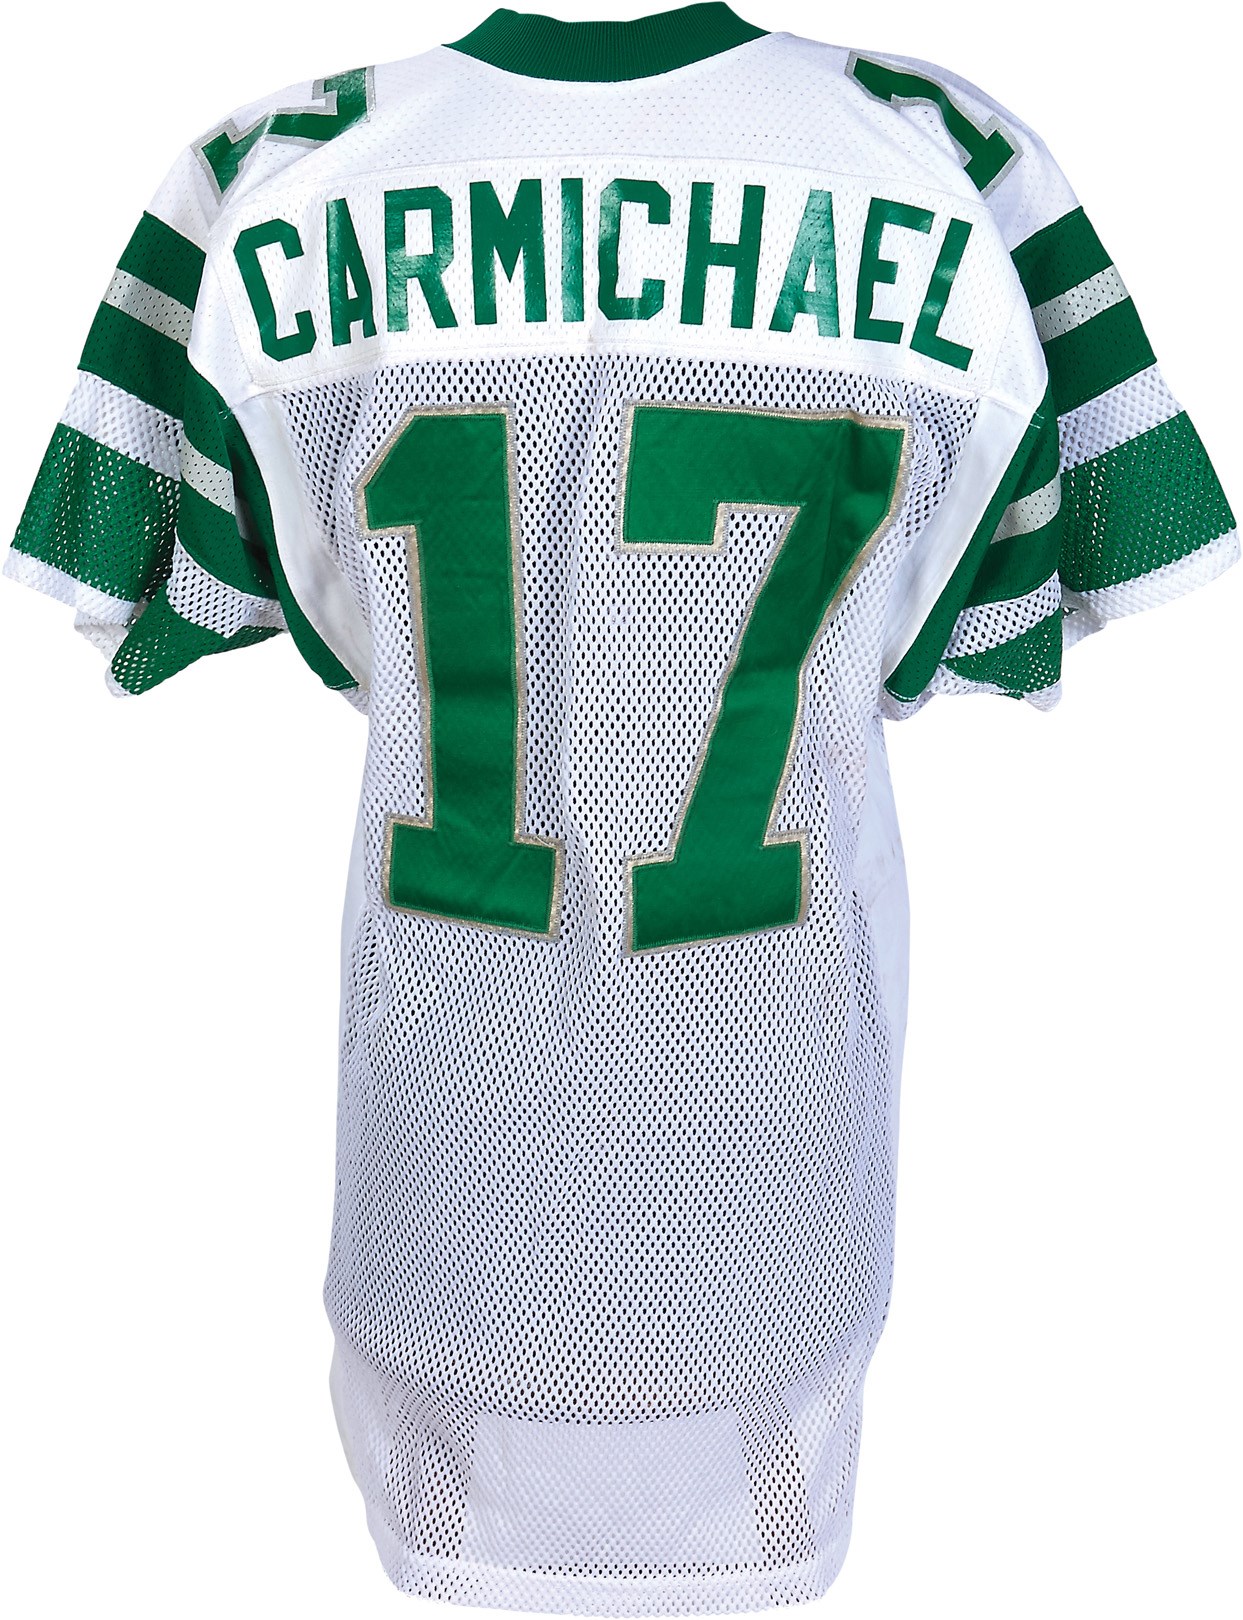 Mid-1970s Harold Carmichael Philadelphia Eagles Game Worn Jersey